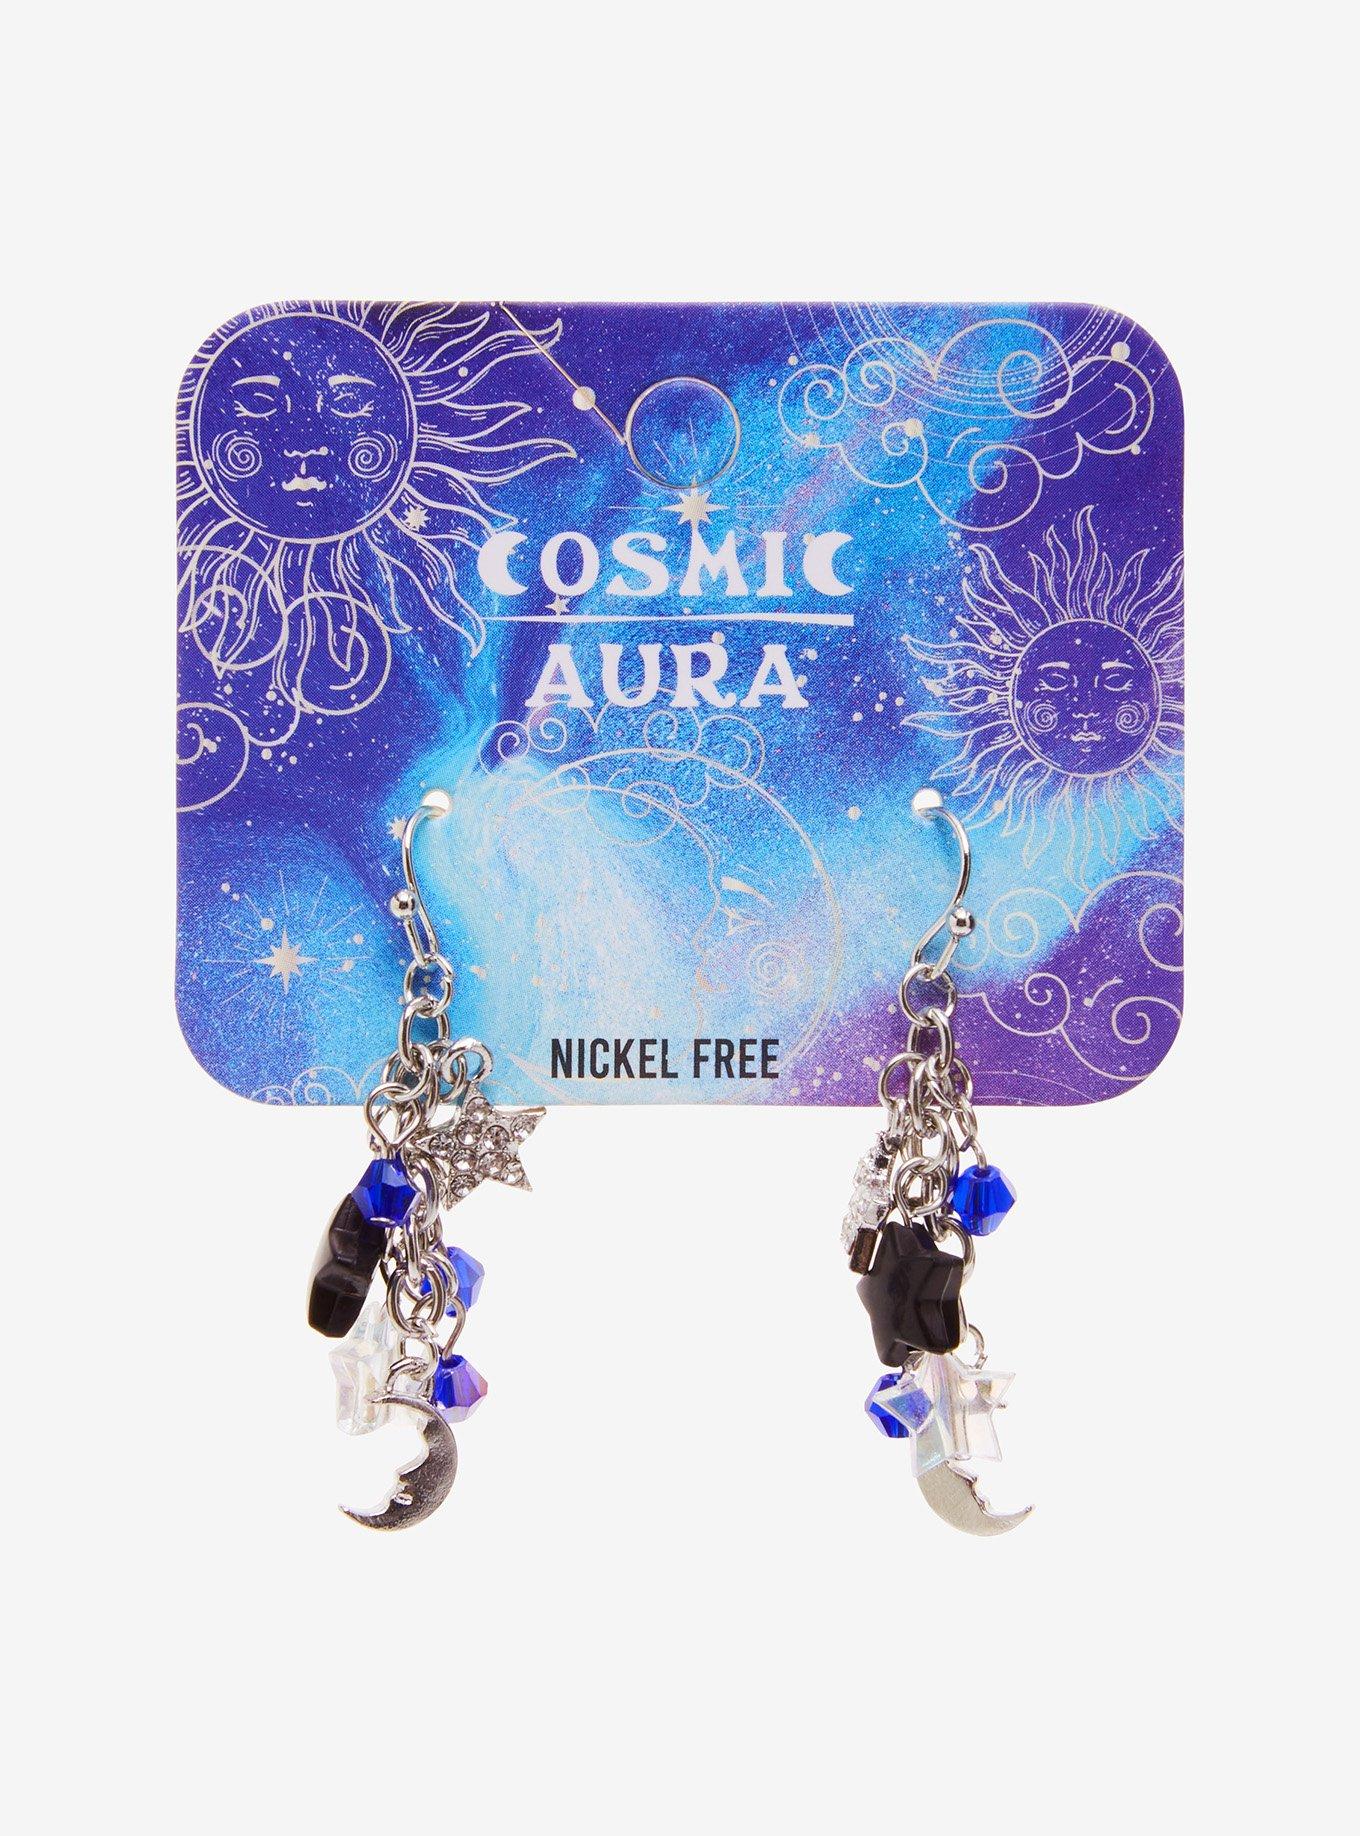 Hot Topic Cosmic Aura Skeleton Fairies Bralette